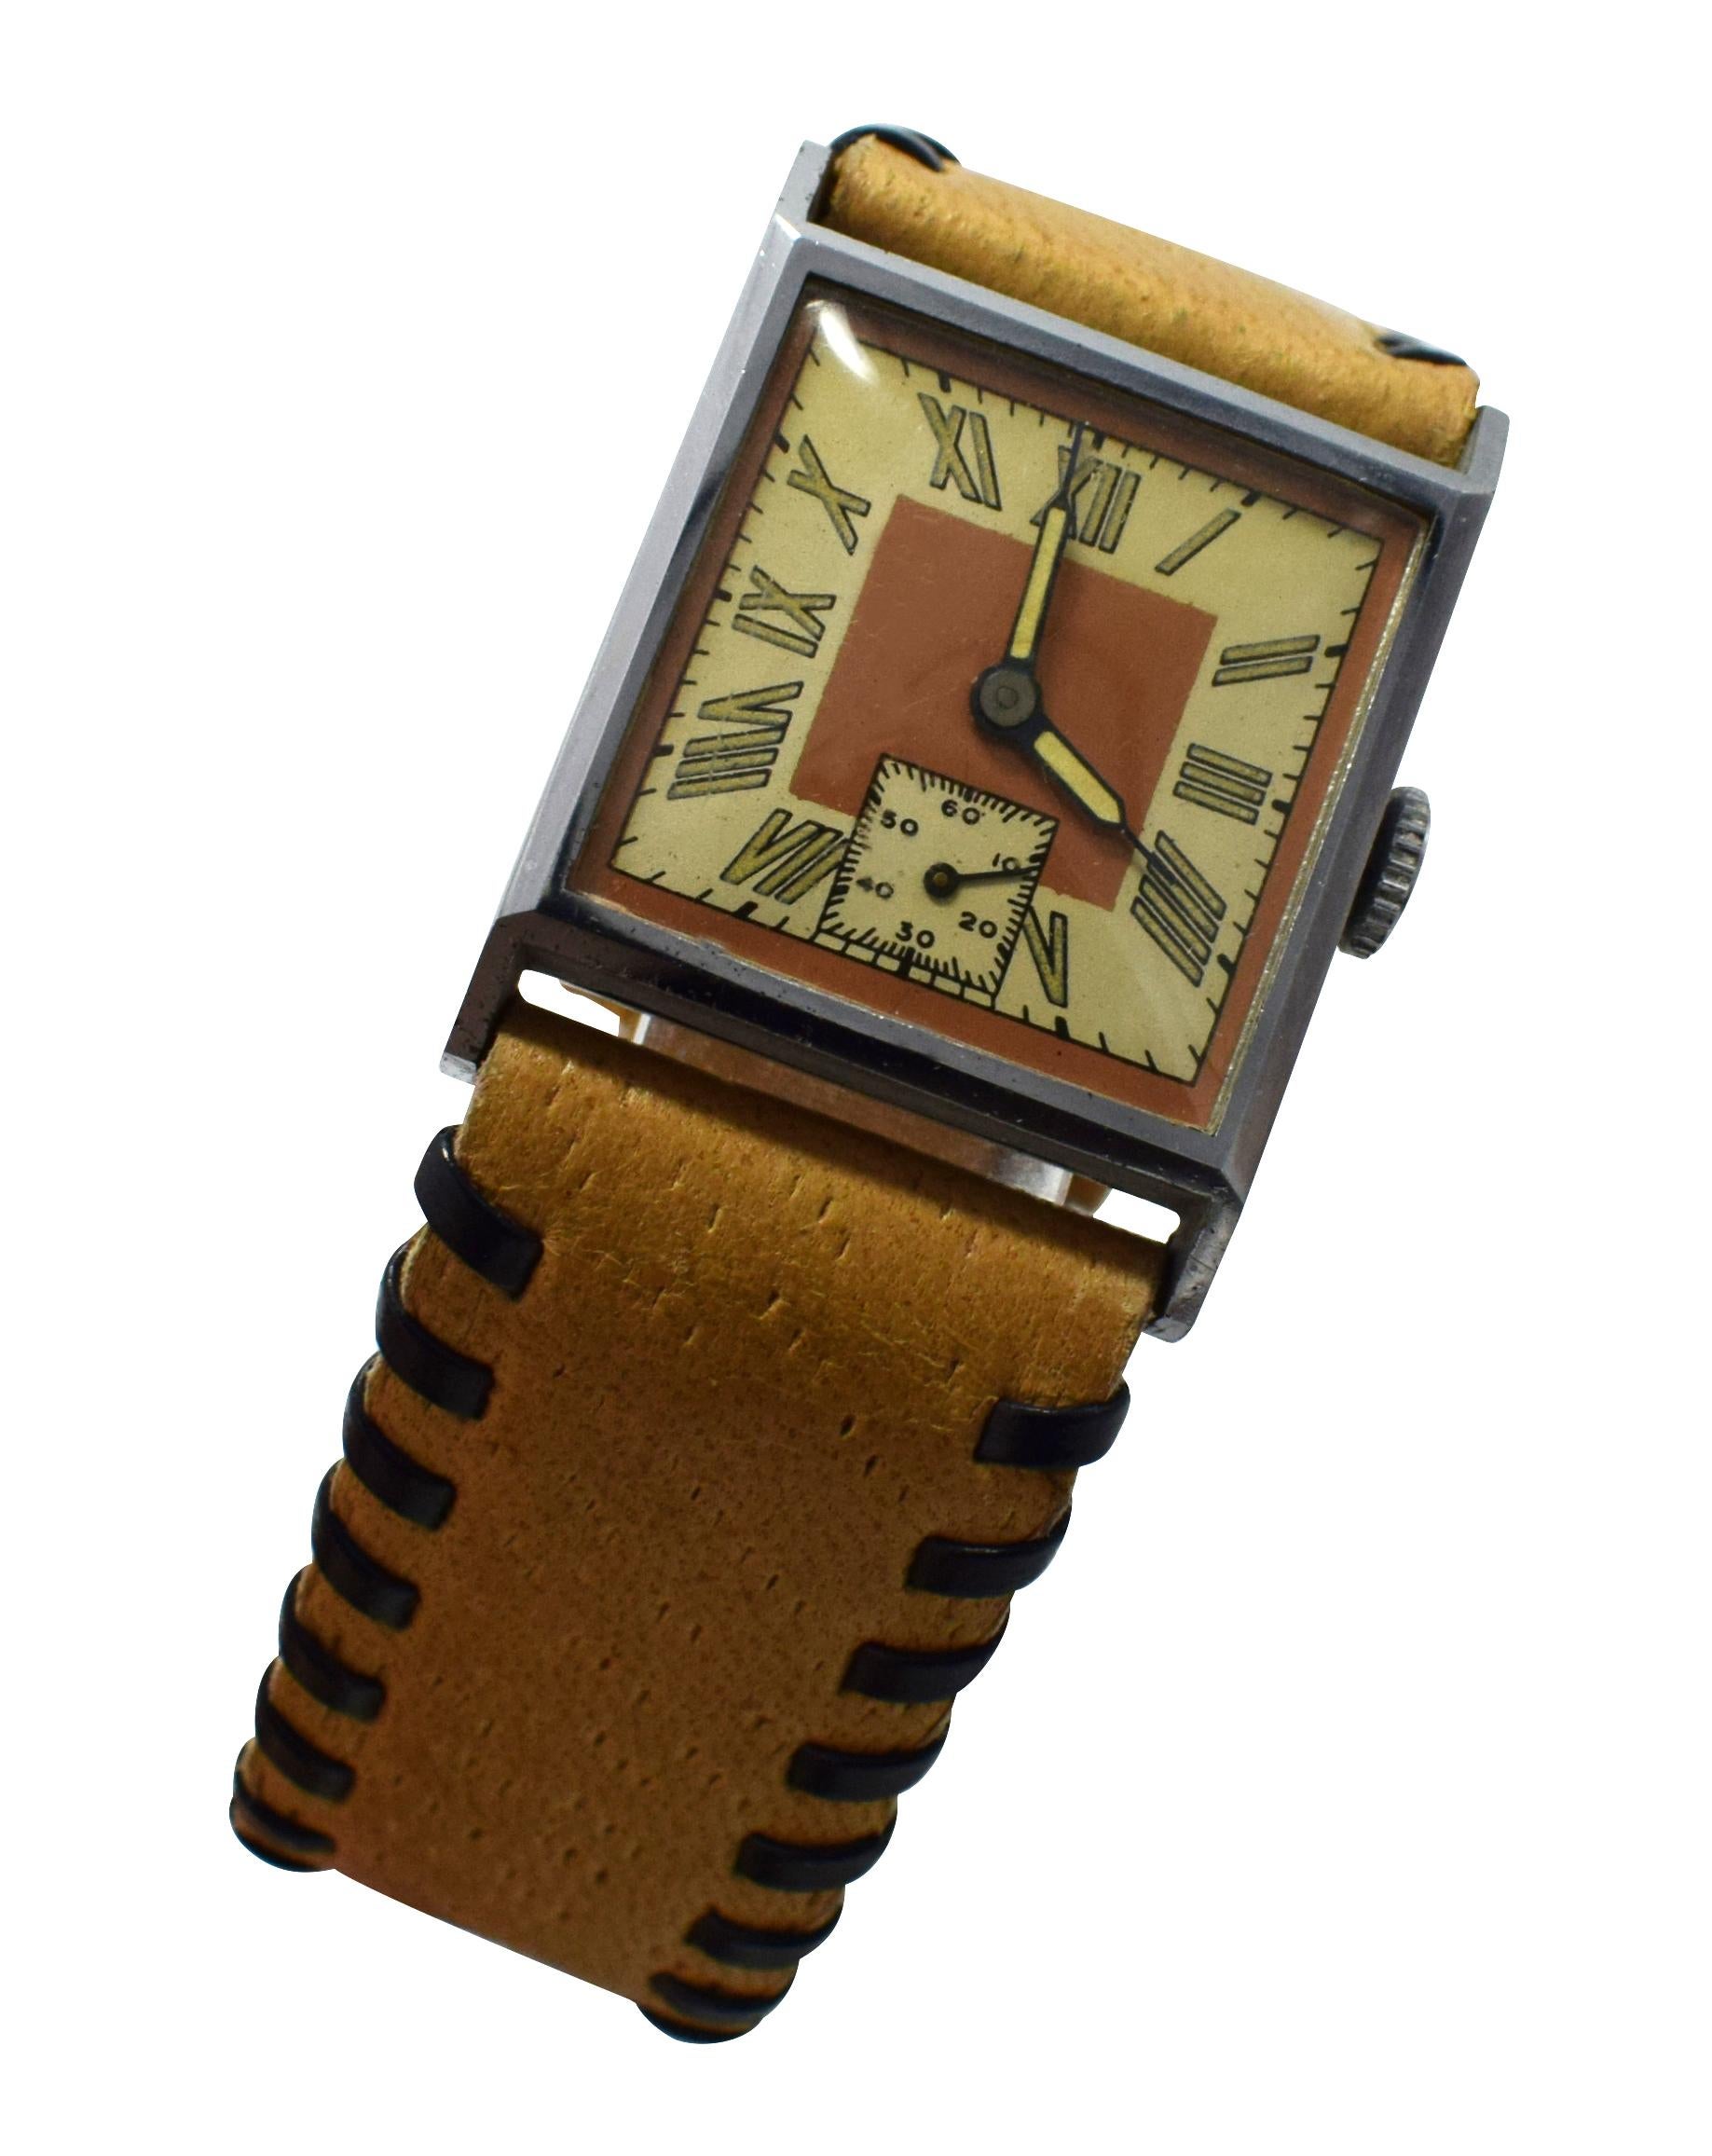 Stylish Art Deco Gents Wrist Watch Old Stock Never Worn, circa 1930 1